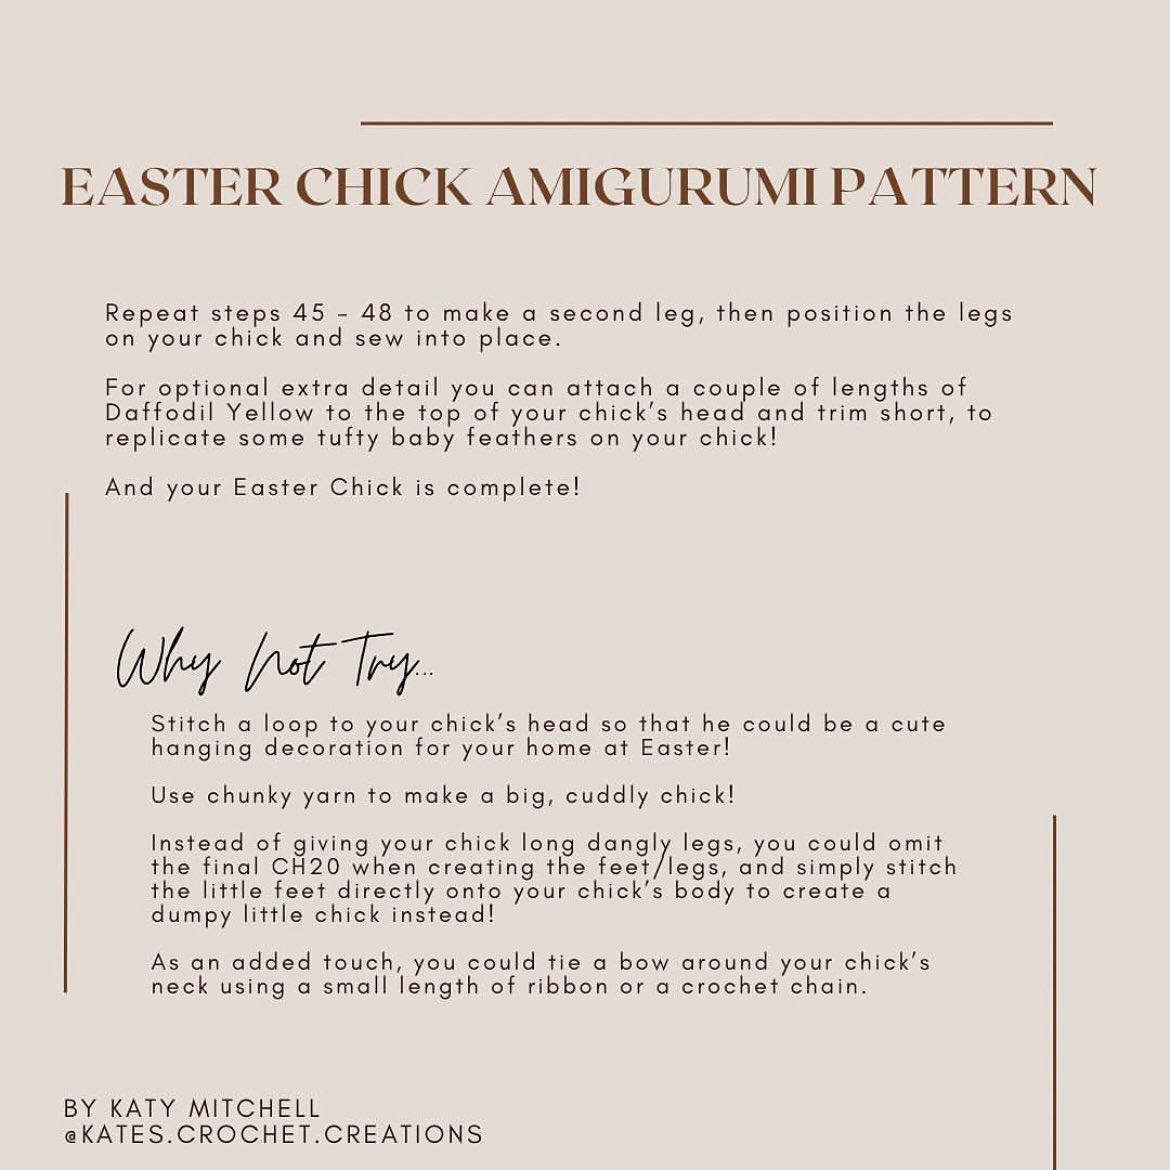 easter chick amigurumi free crochet pattern